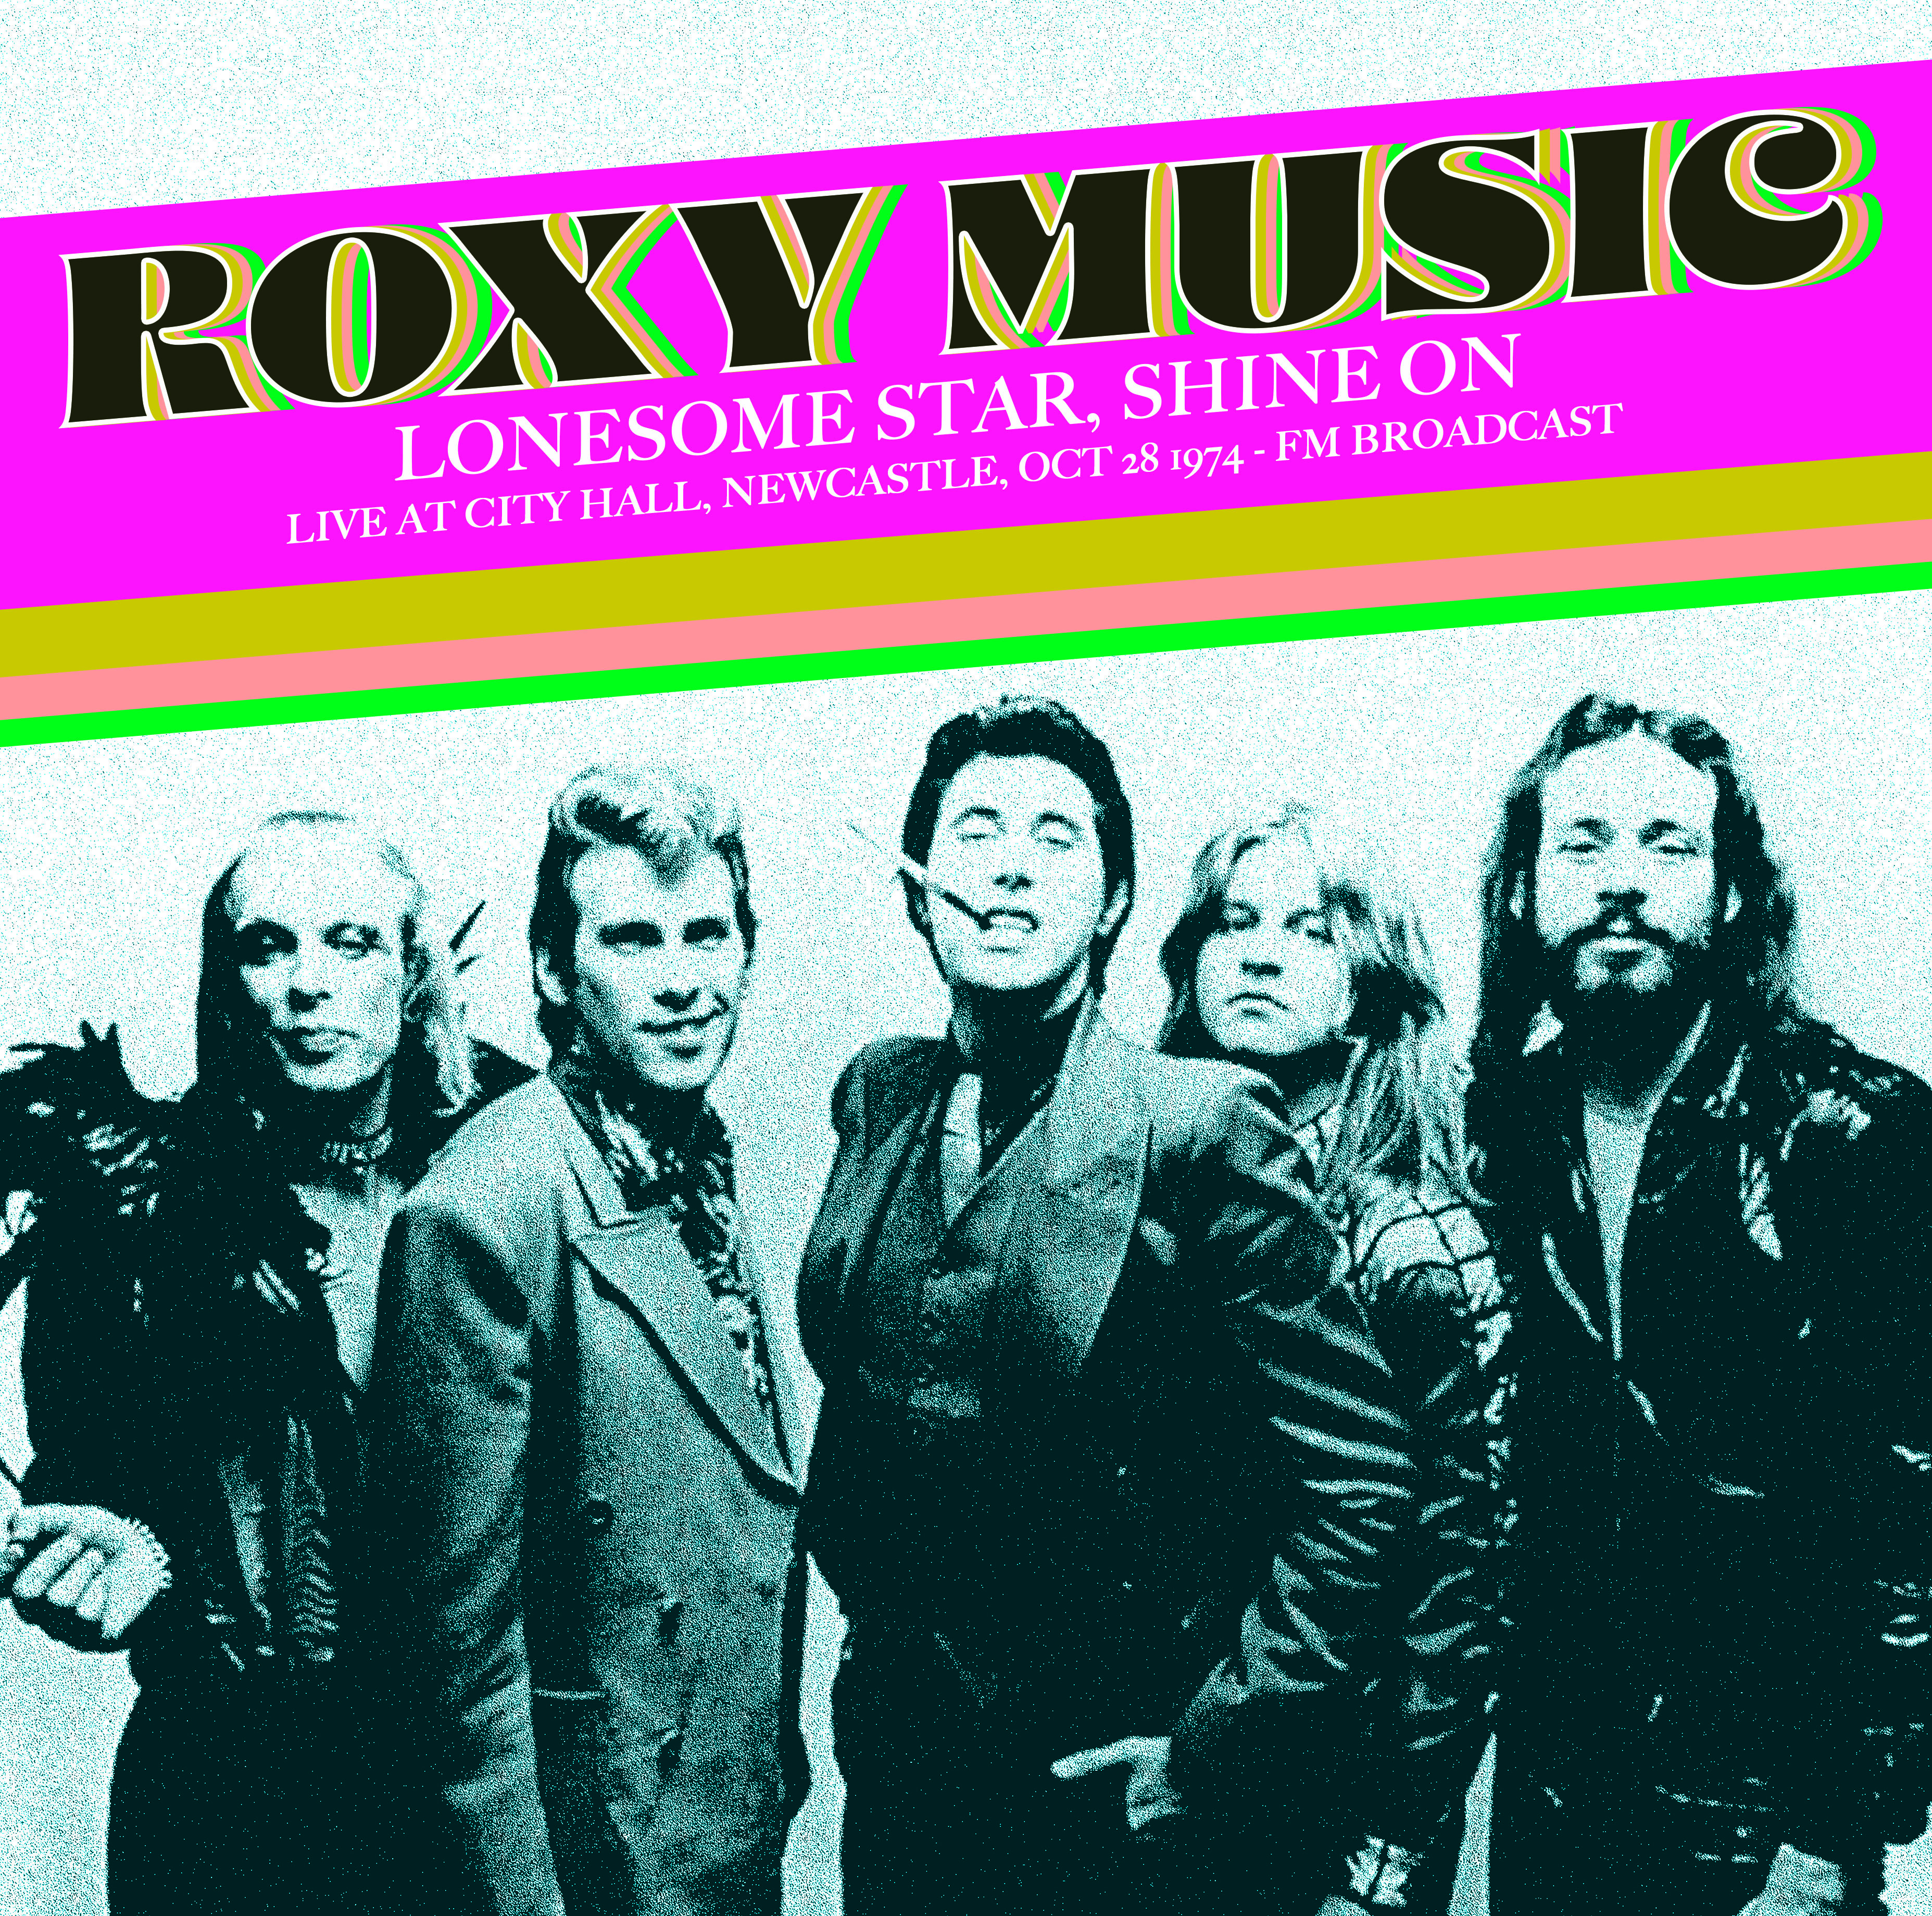 Roxy Music Lonesome Star, Shine On: Live at City Hall, Newcastle, Oct 28 (Vinyl) - Imagen 1 de 1